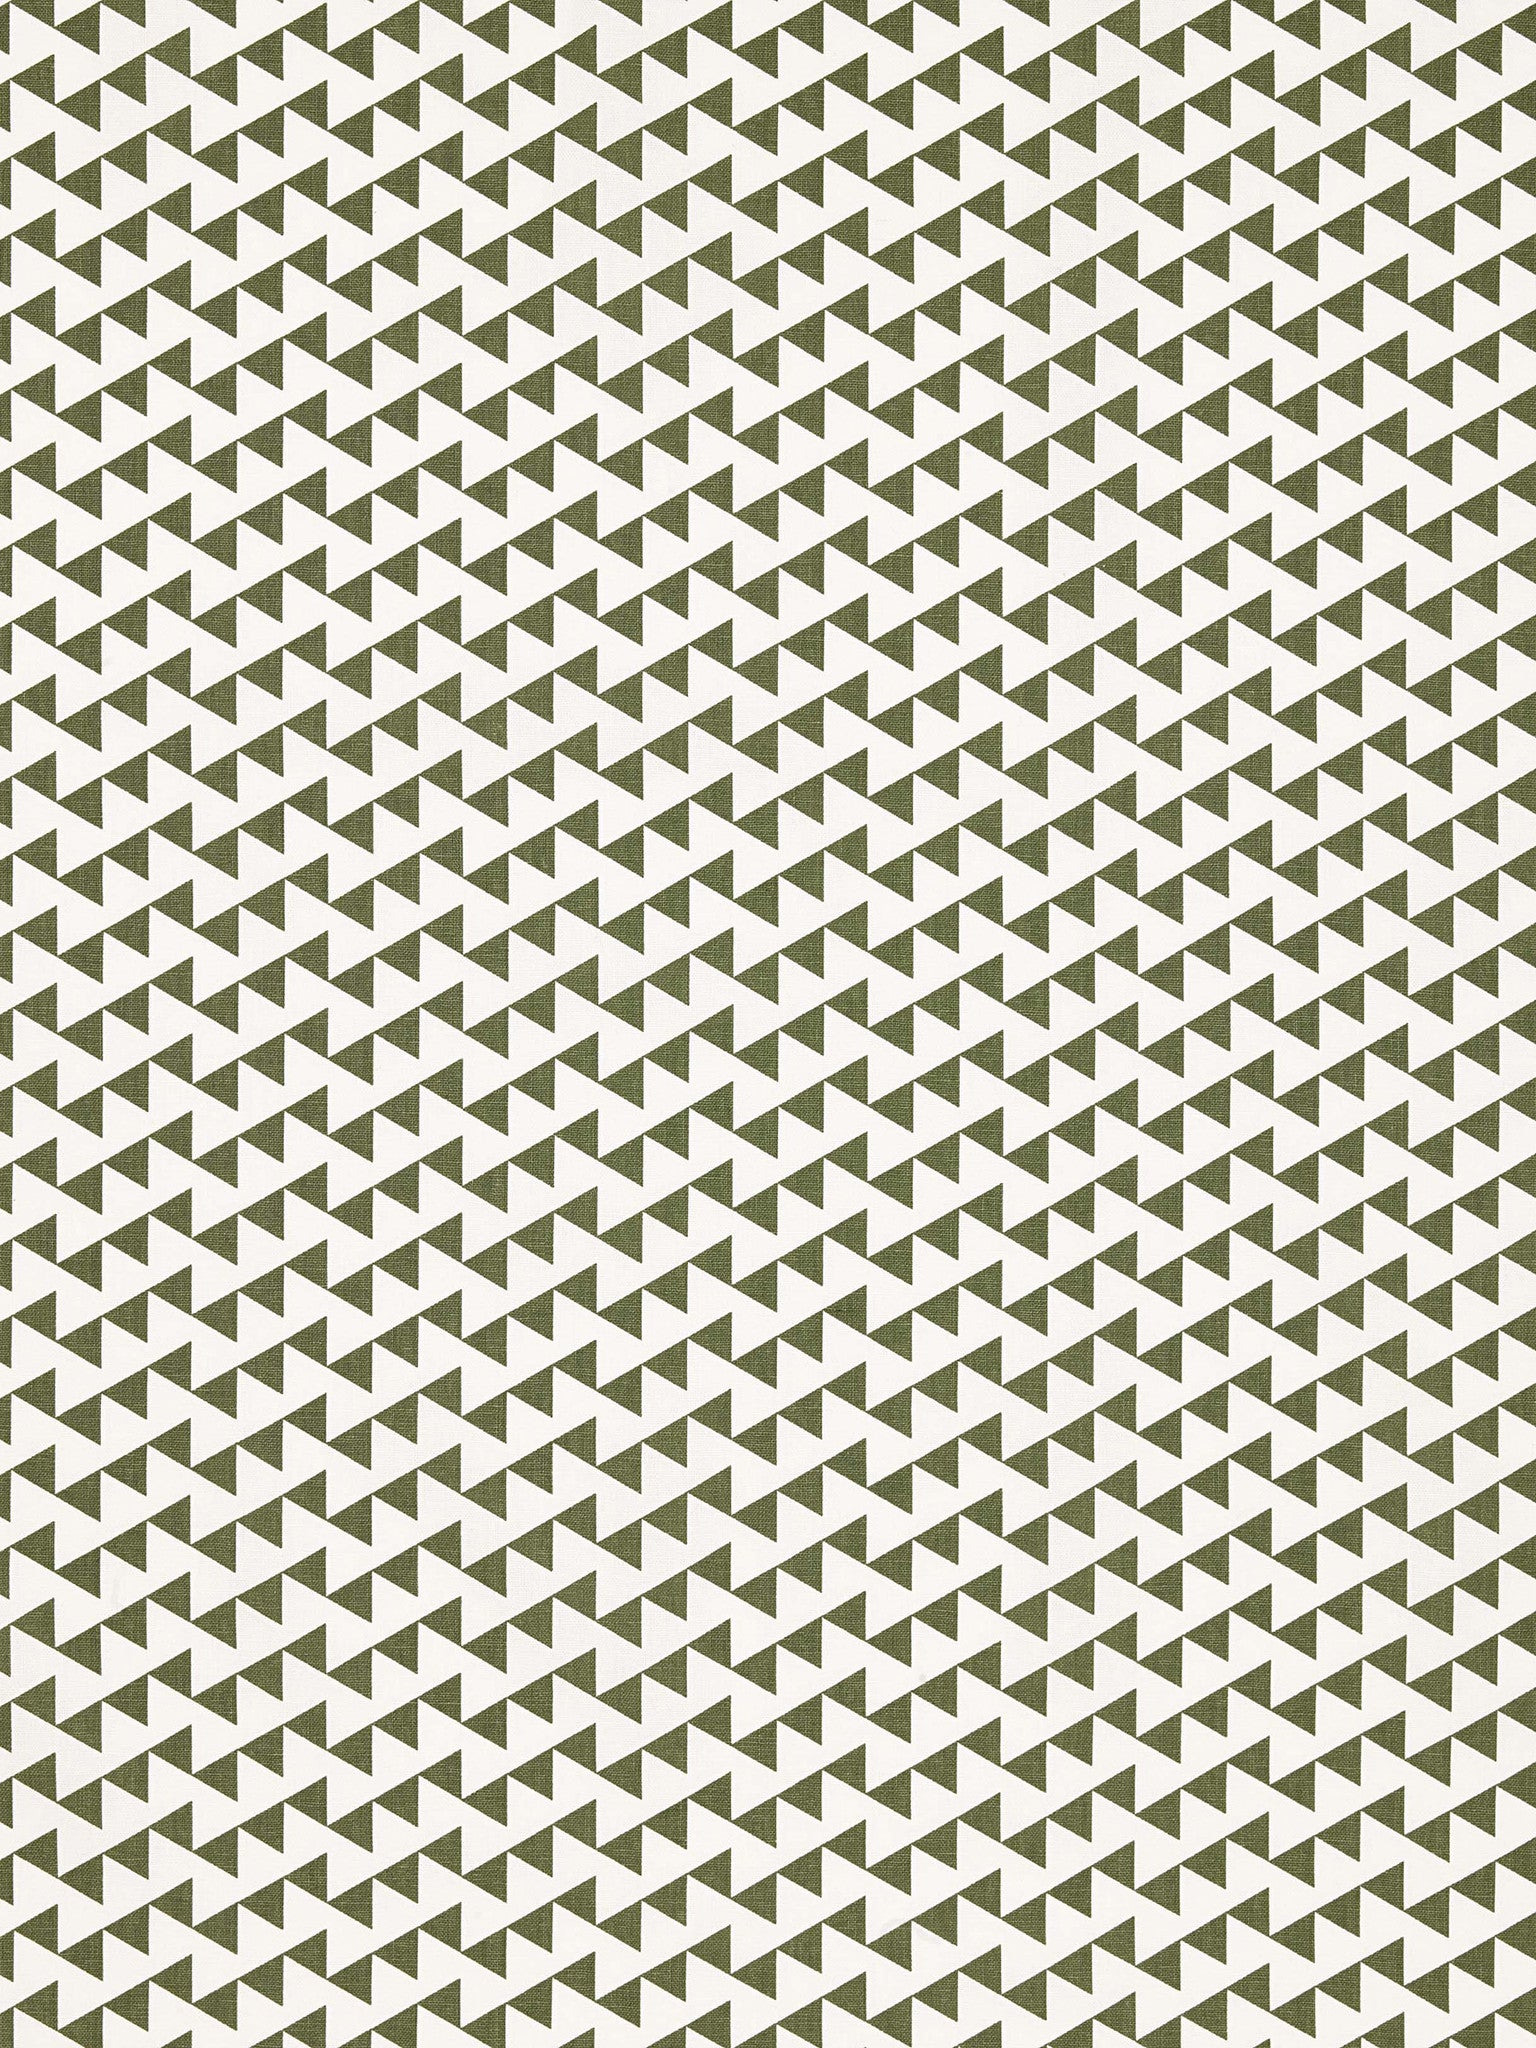 Bunting Geometric Pattern Cotton Linen Fabric in Dark Olive Green